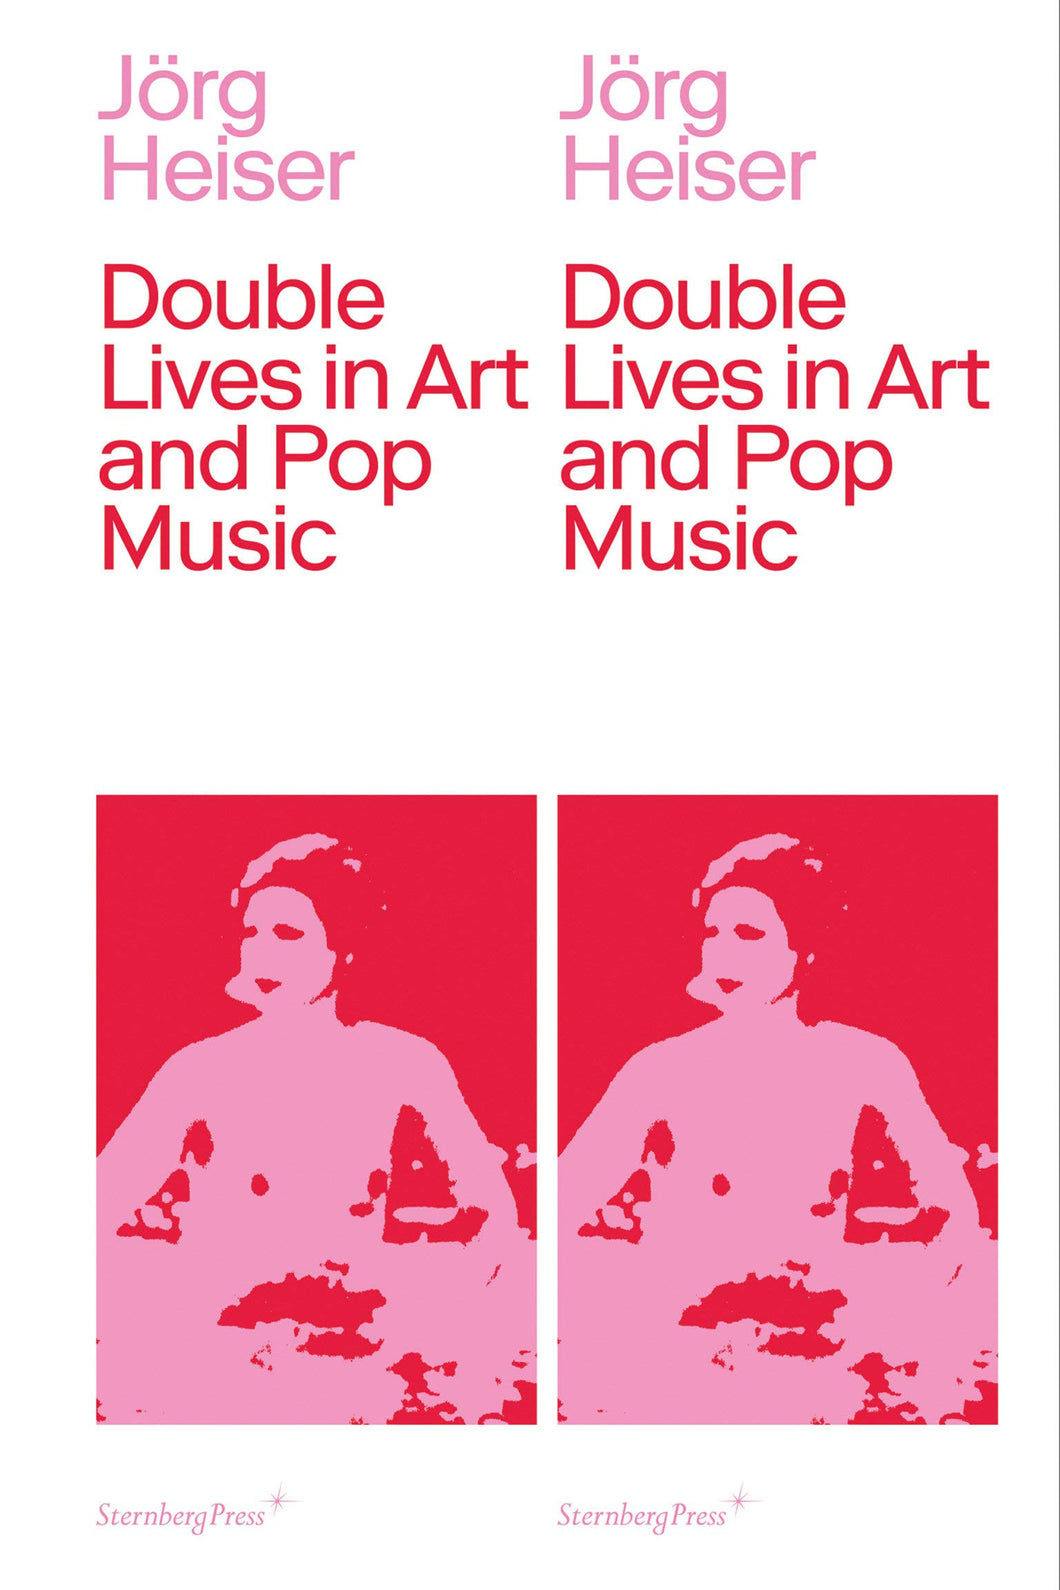 Jörg Heiser, <br>Double Lives in Art and Pop Music